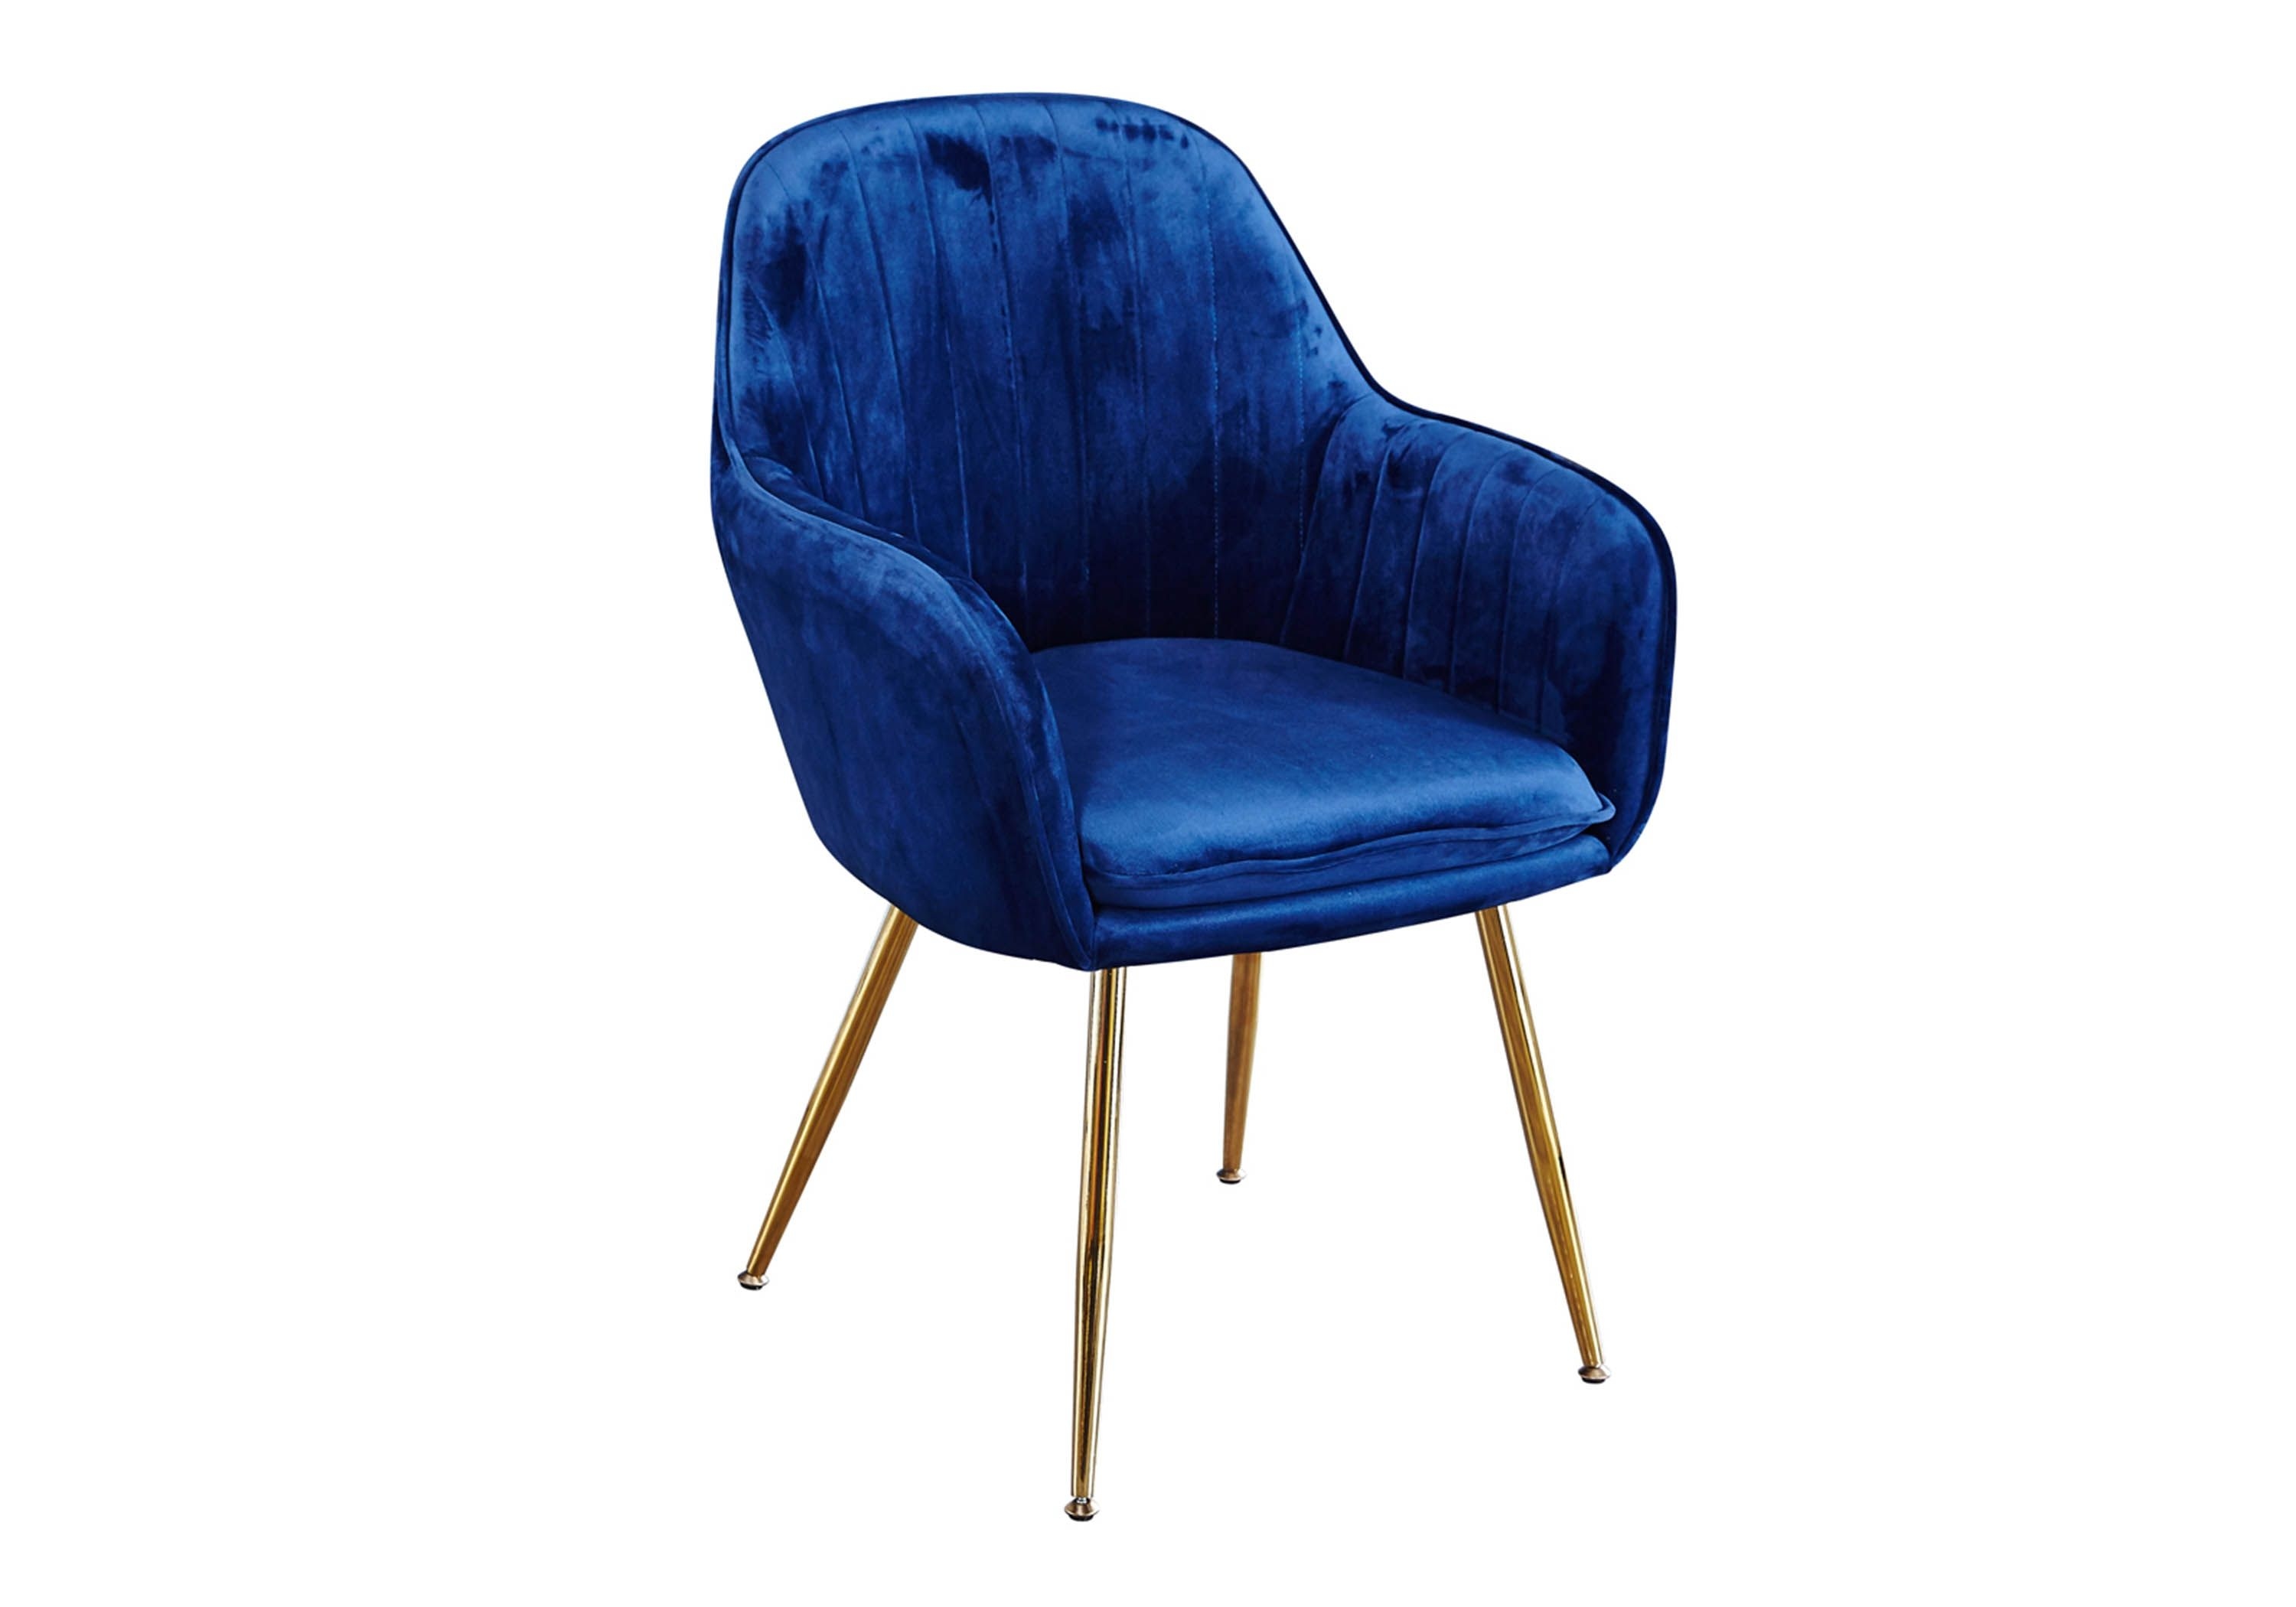 Lara Royal Blue Dining Chair